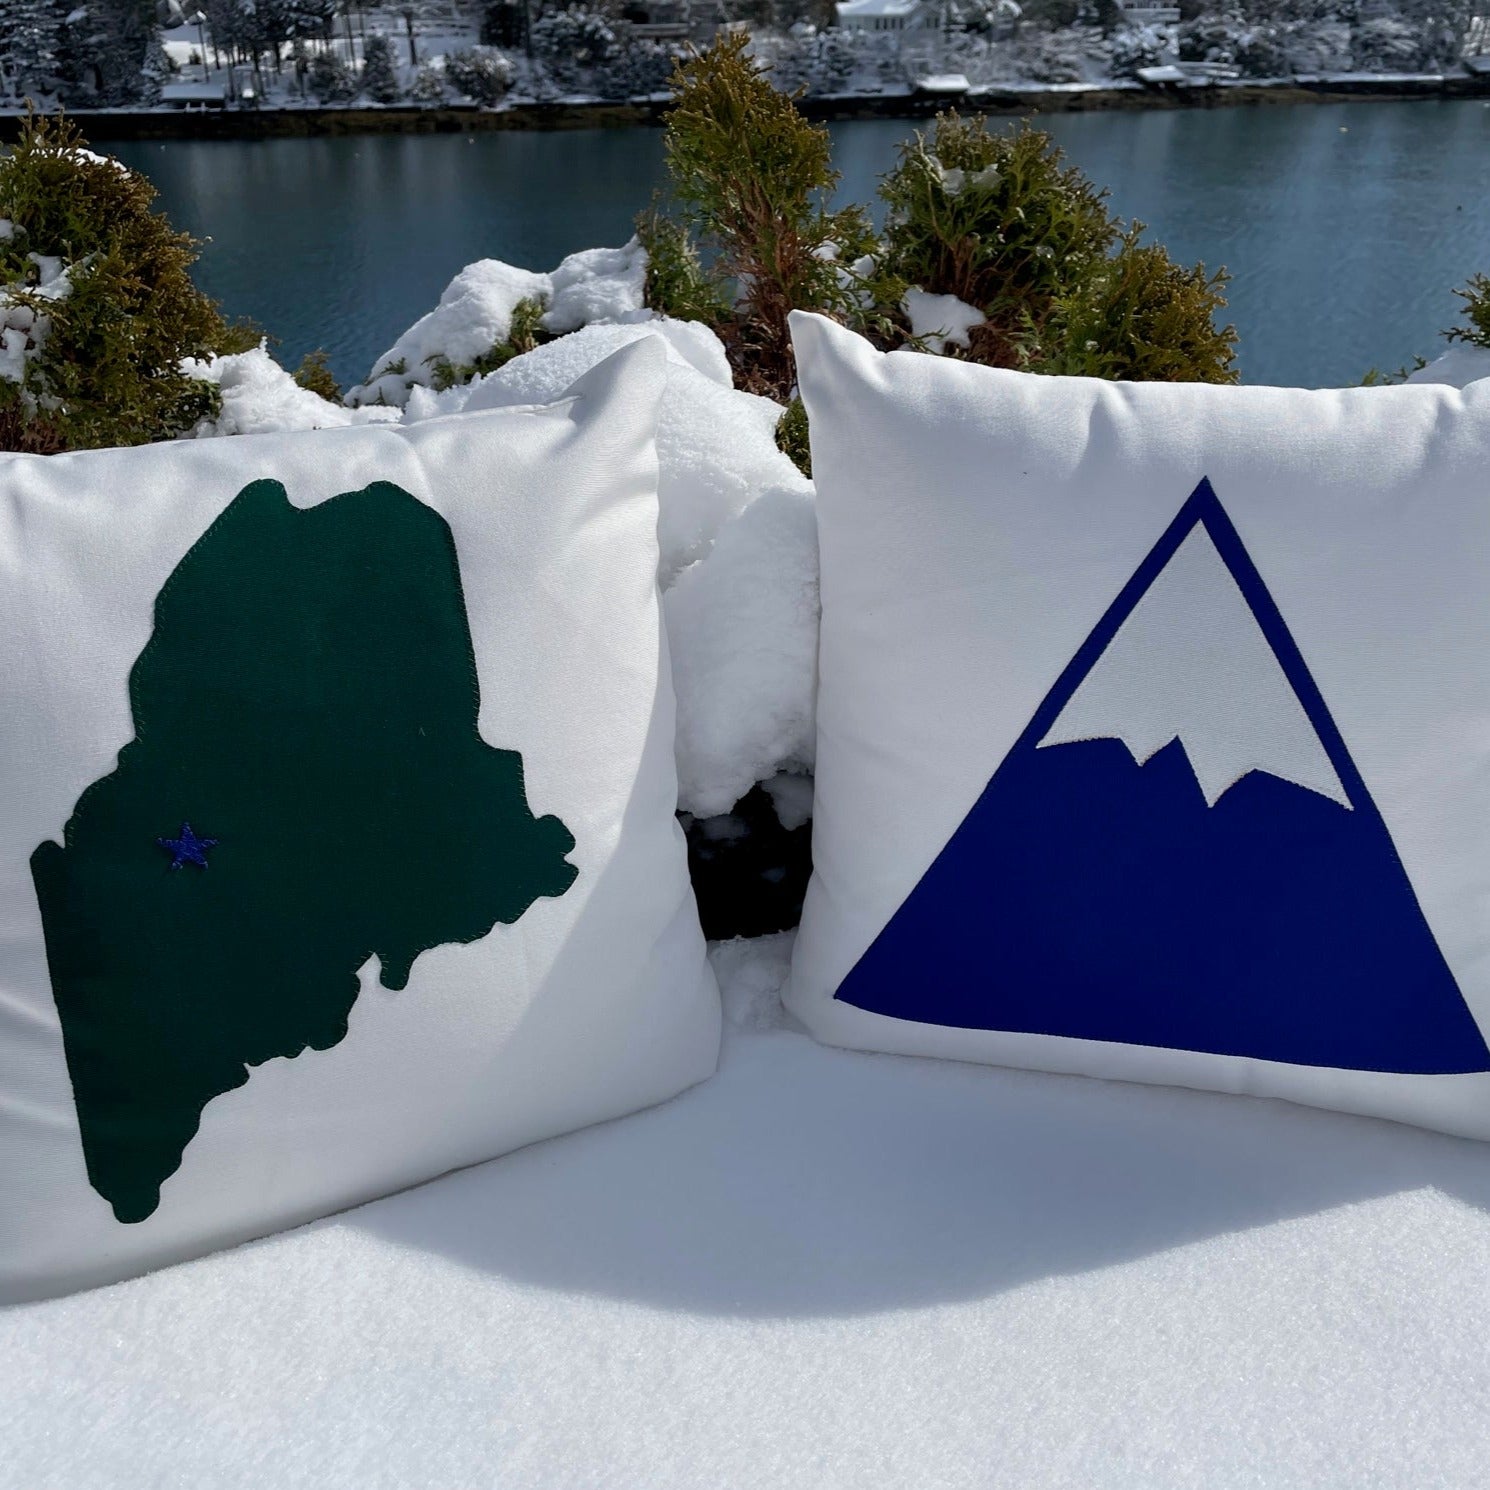 Maine Coast Pillows - Swans Island Company